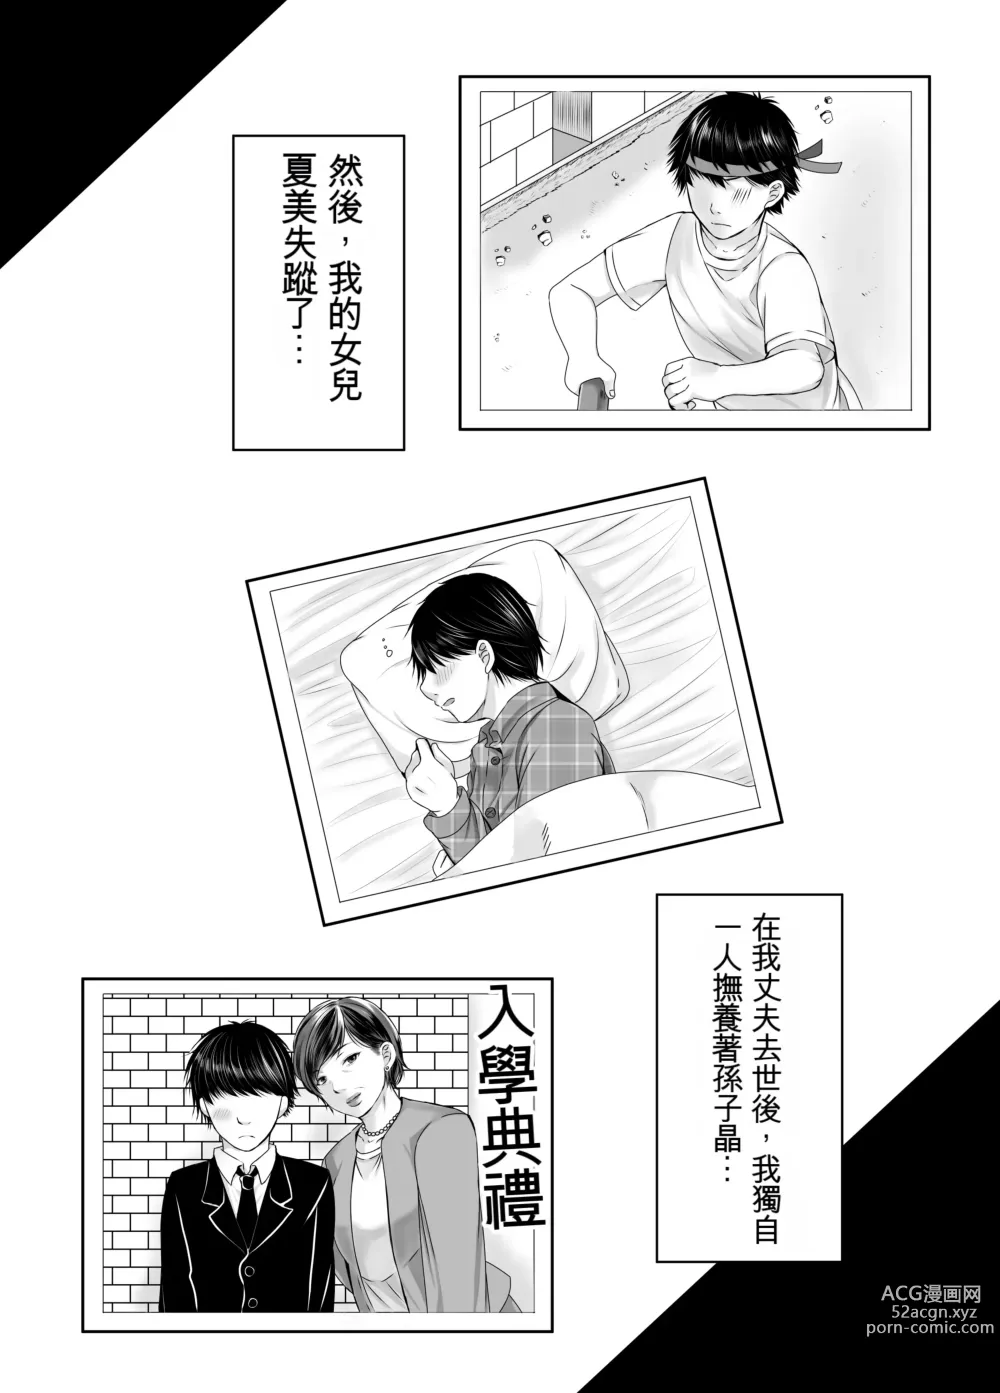 Page 4 of manga 祖母與孫子 ~孫子的第一次被內射的那一天~